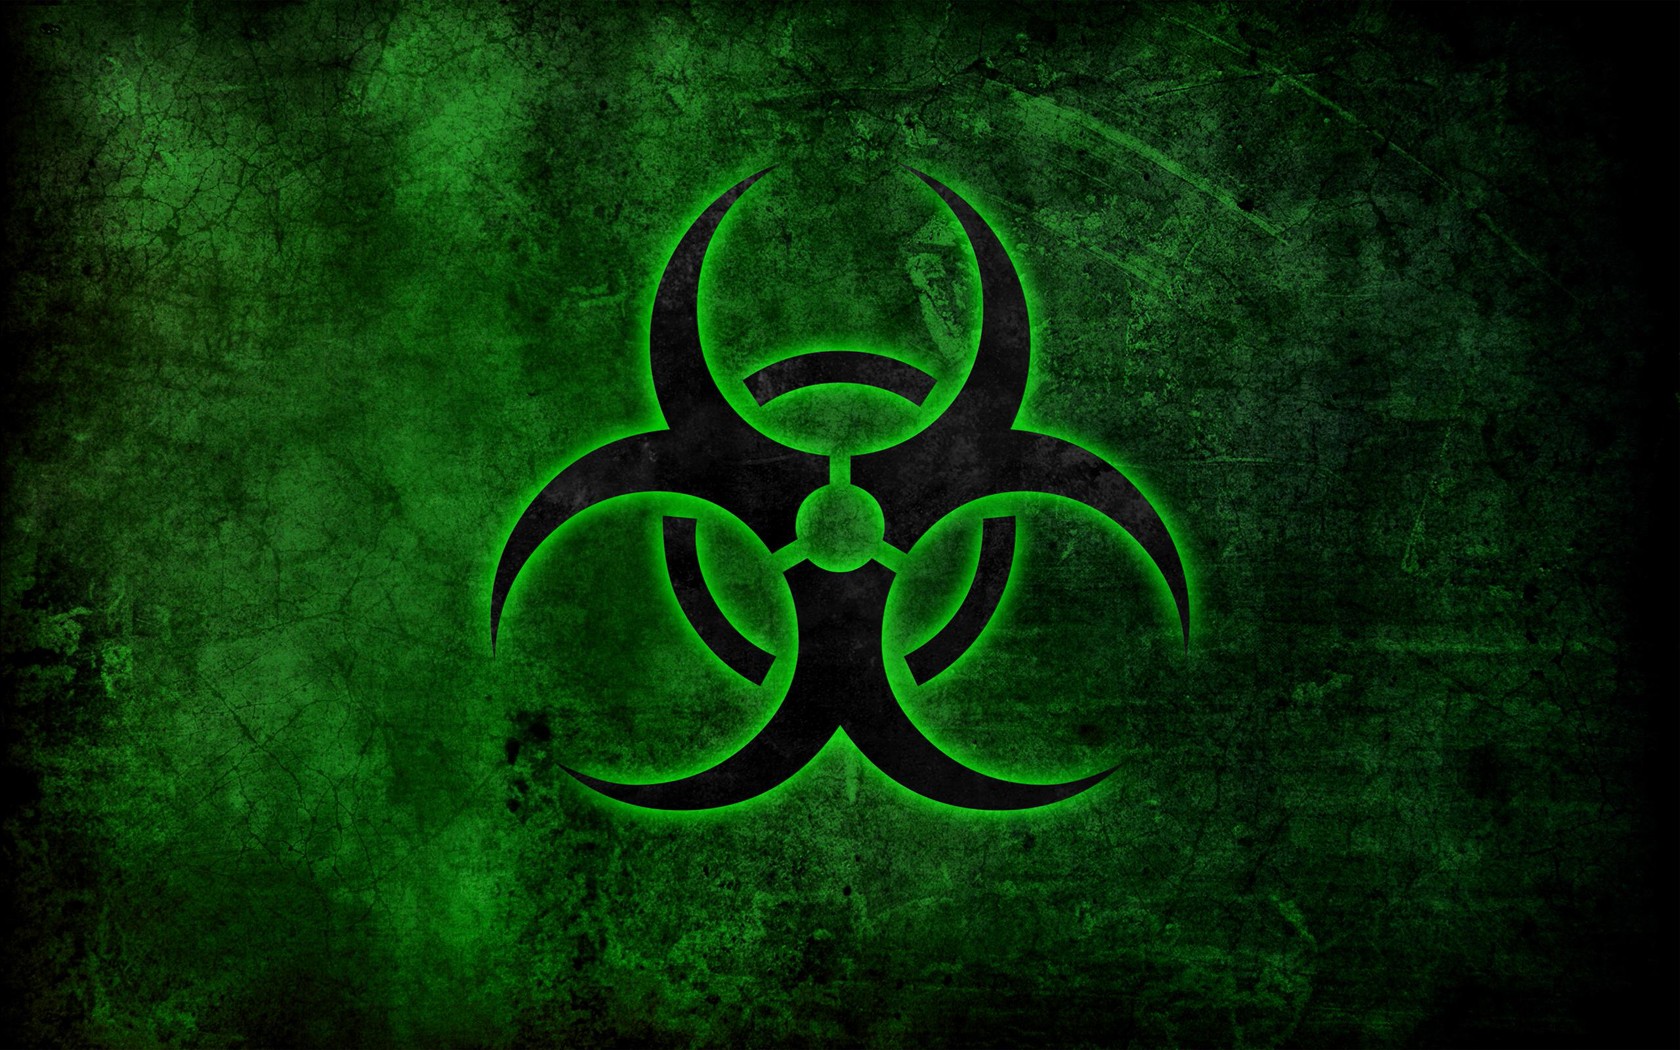 Plague Apocalyptic Green Grunge Digital Art 1680x1050